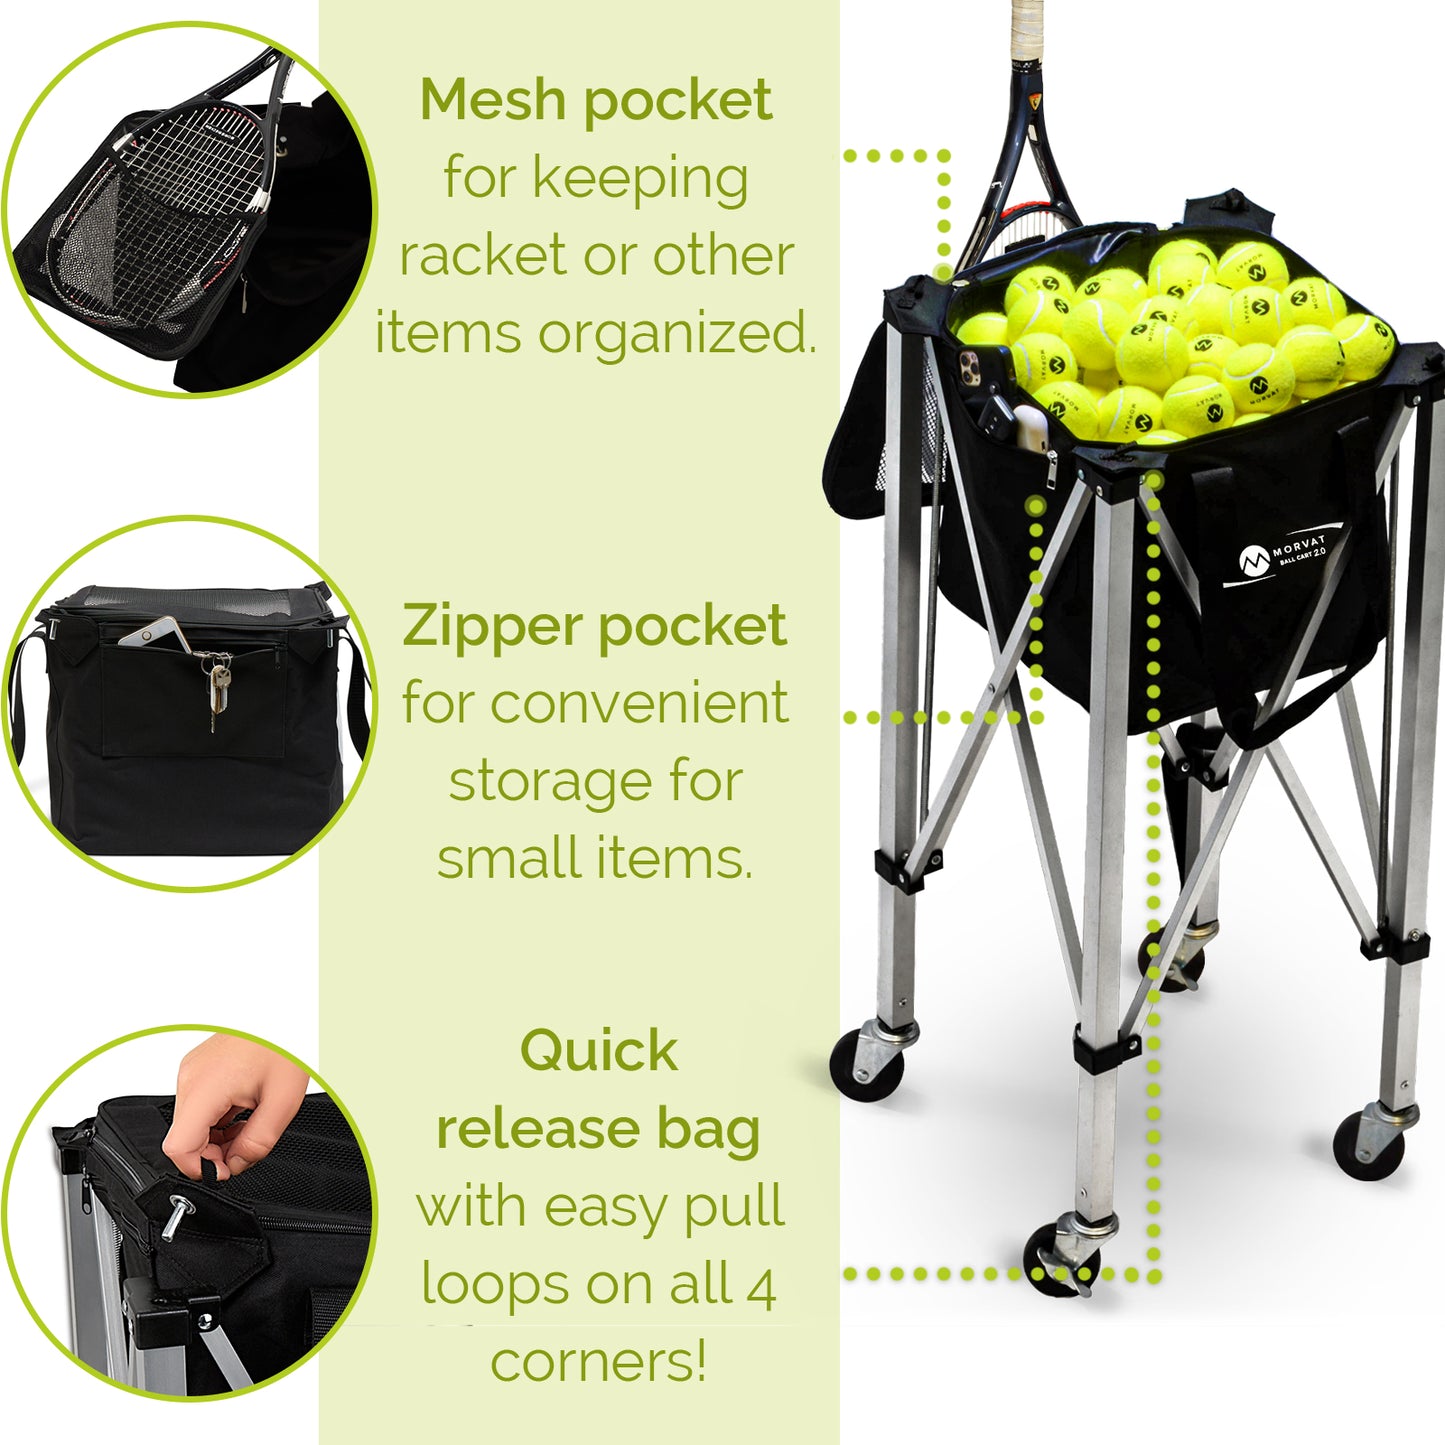 
                  
                    Morvat Heavy-Duty 165 Tennis Ball Cart with Bag, 3 Balls & Carry Bag
                  
                